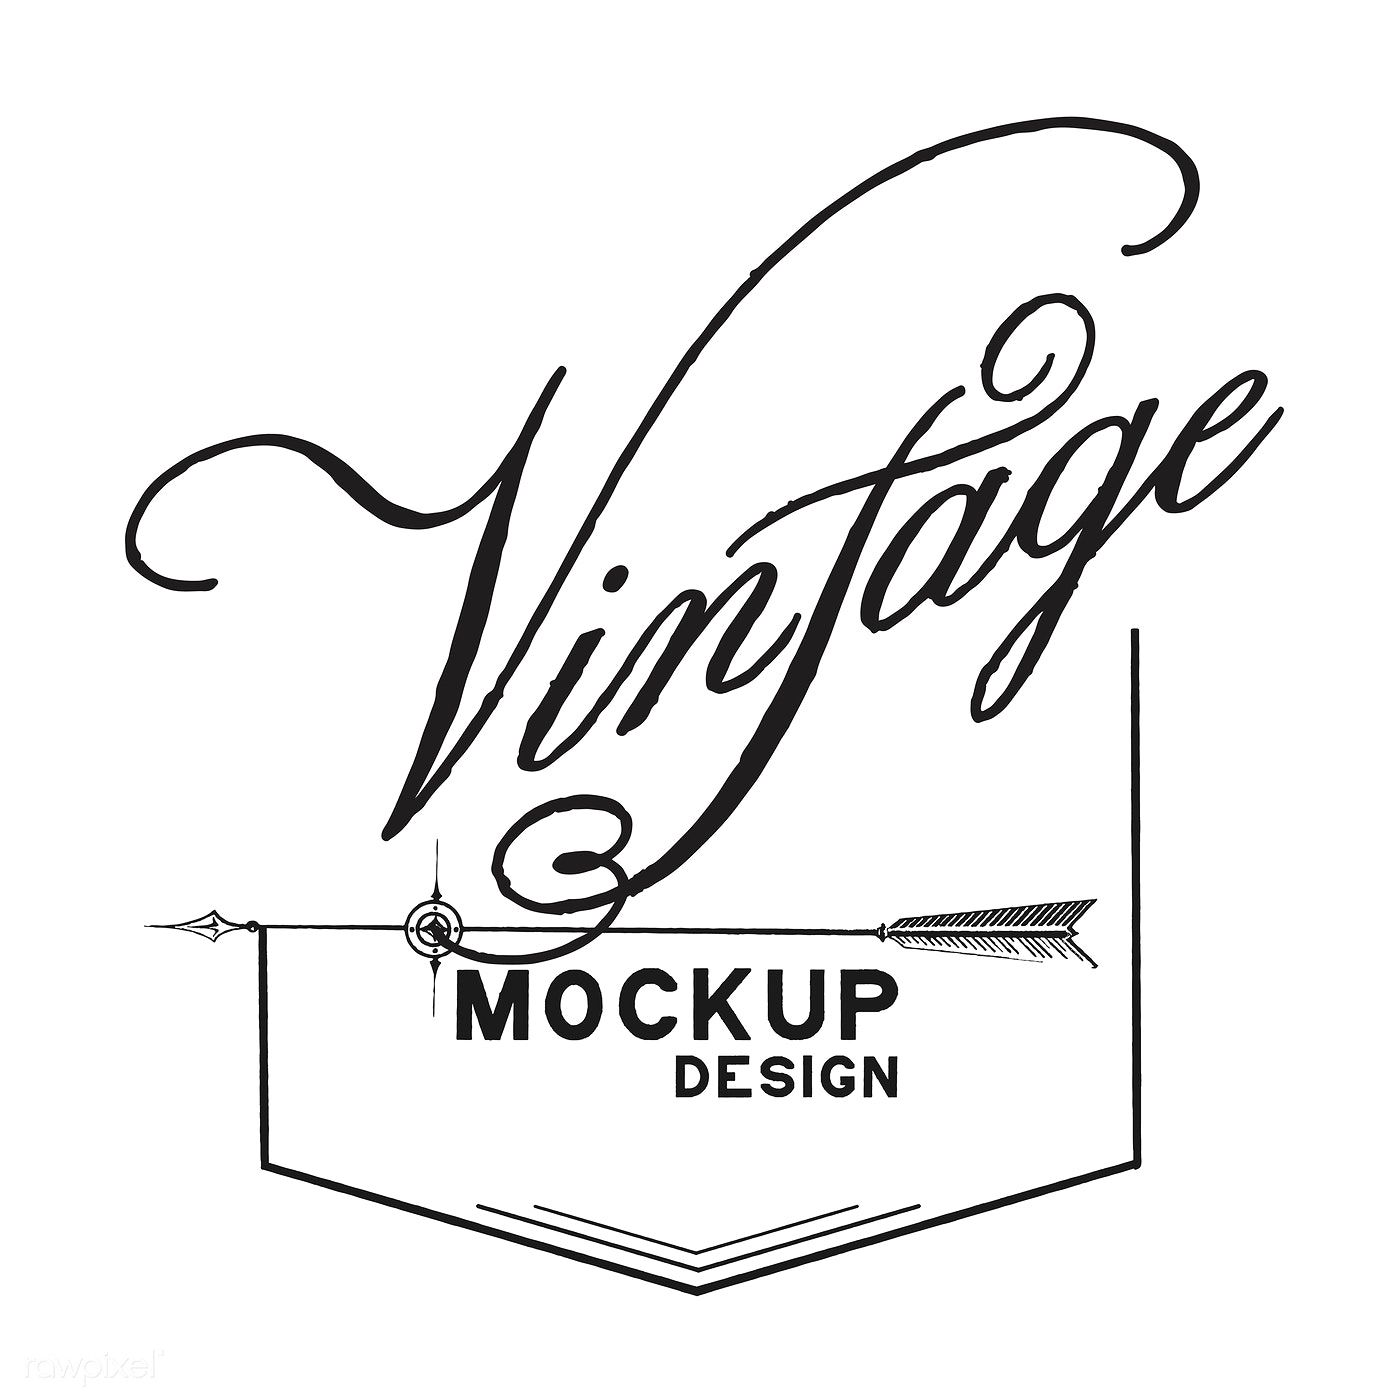 Vintage mockup logo design vector | free image by rawpixel.com / sasi